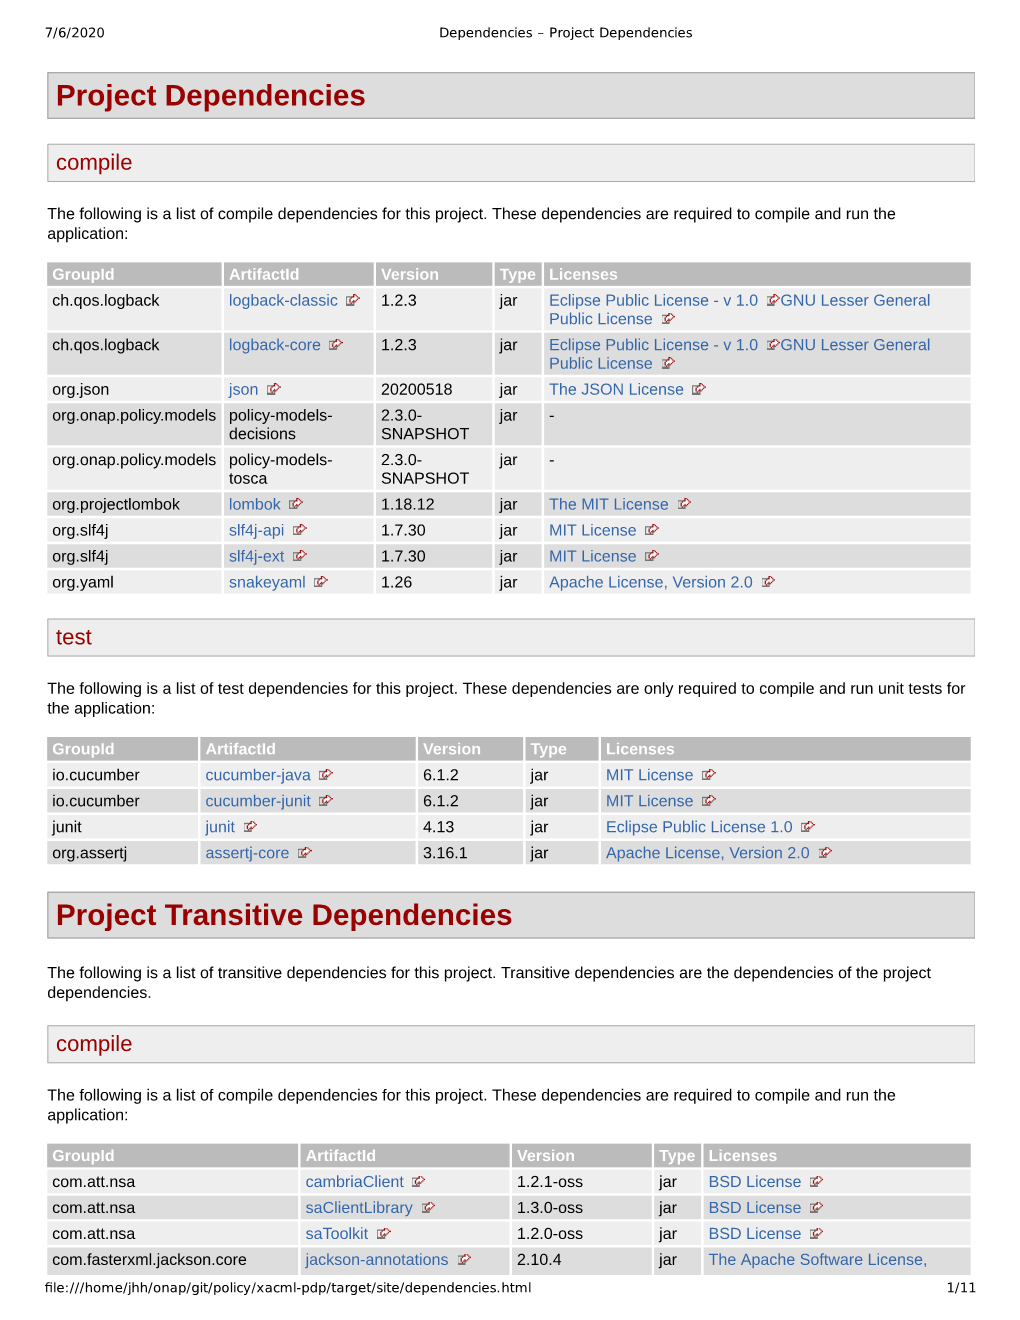 Project Dependencies Project Transitive Dependencies